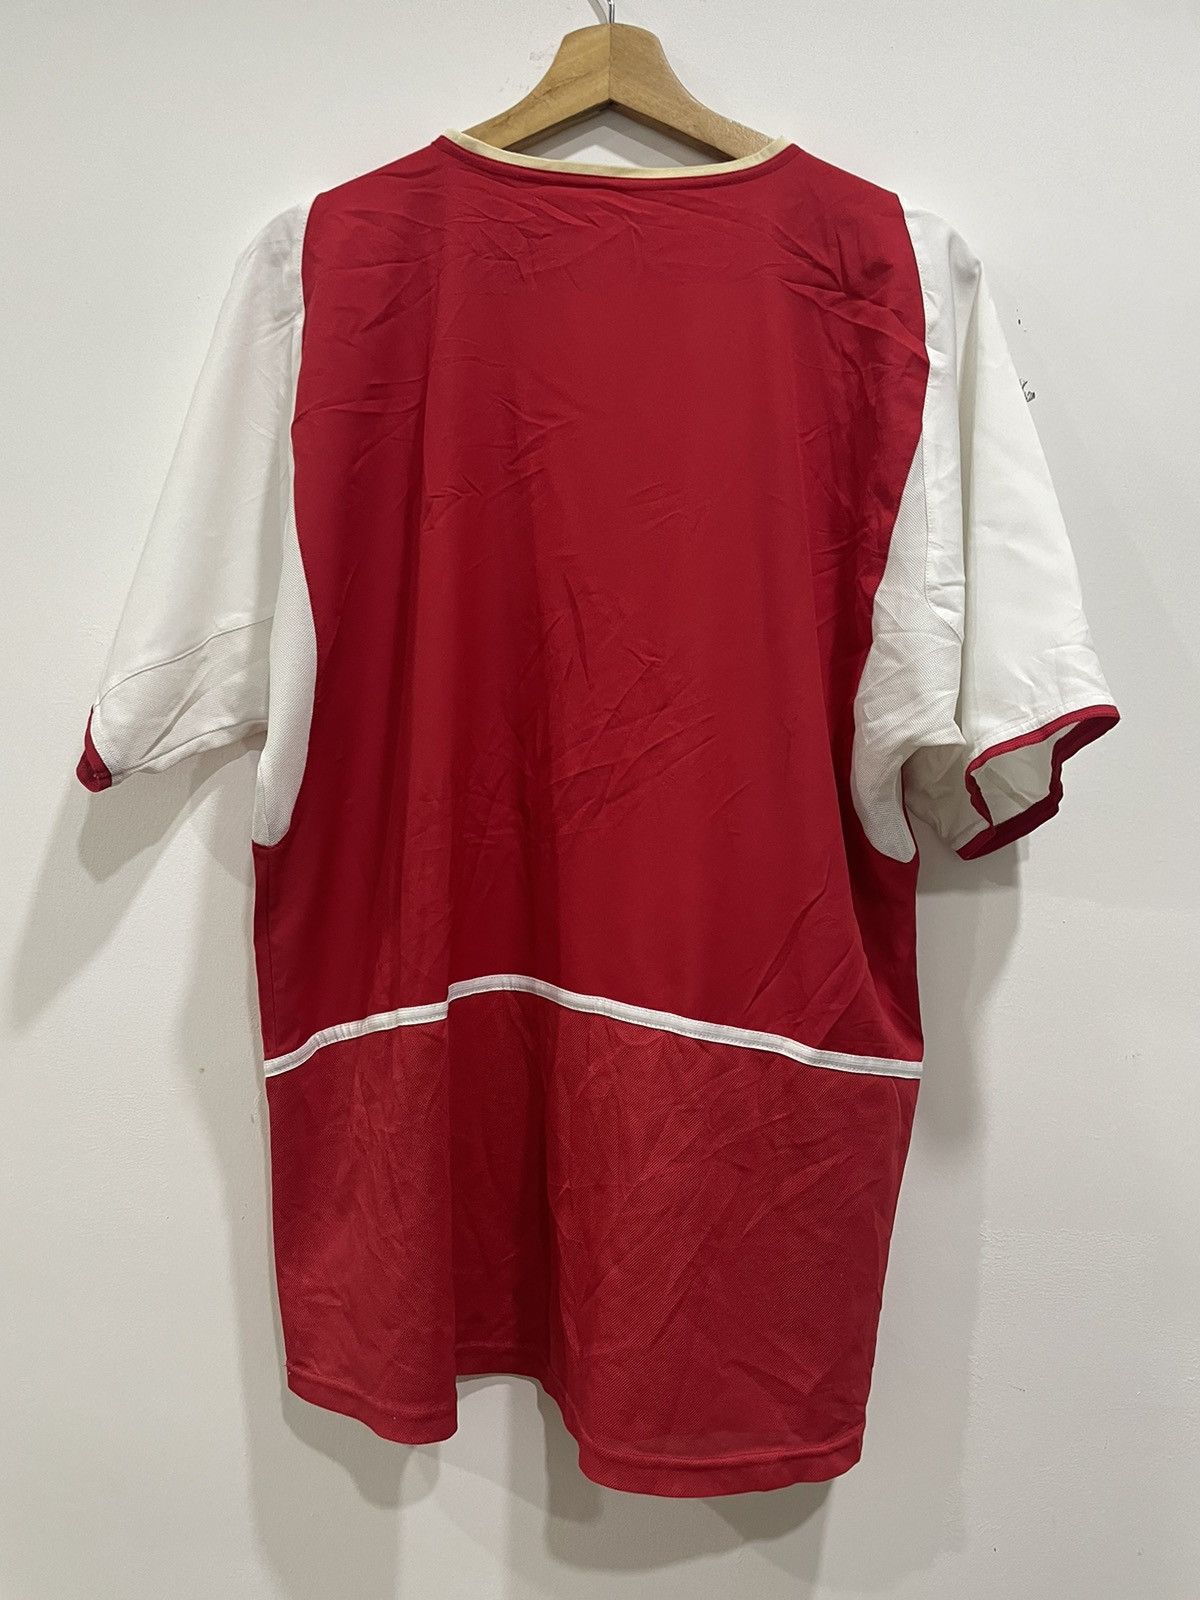 Arsenal 02/03 Vintage Jersey - 15